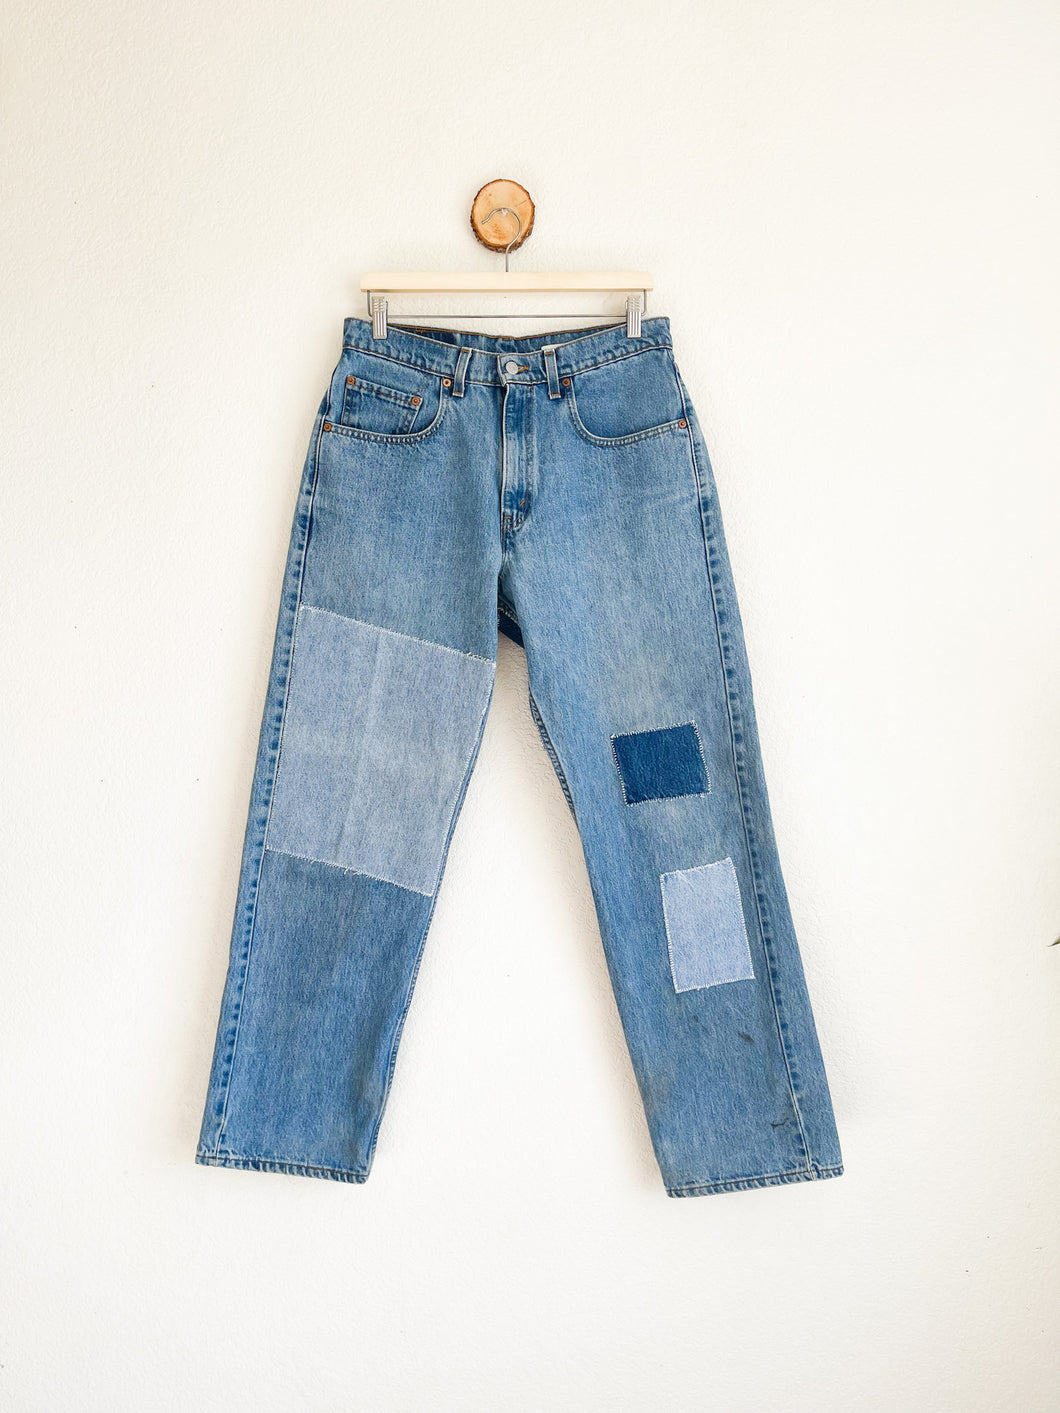 Vintage Levi's Jeans with Denim Patchwork Detail - 32